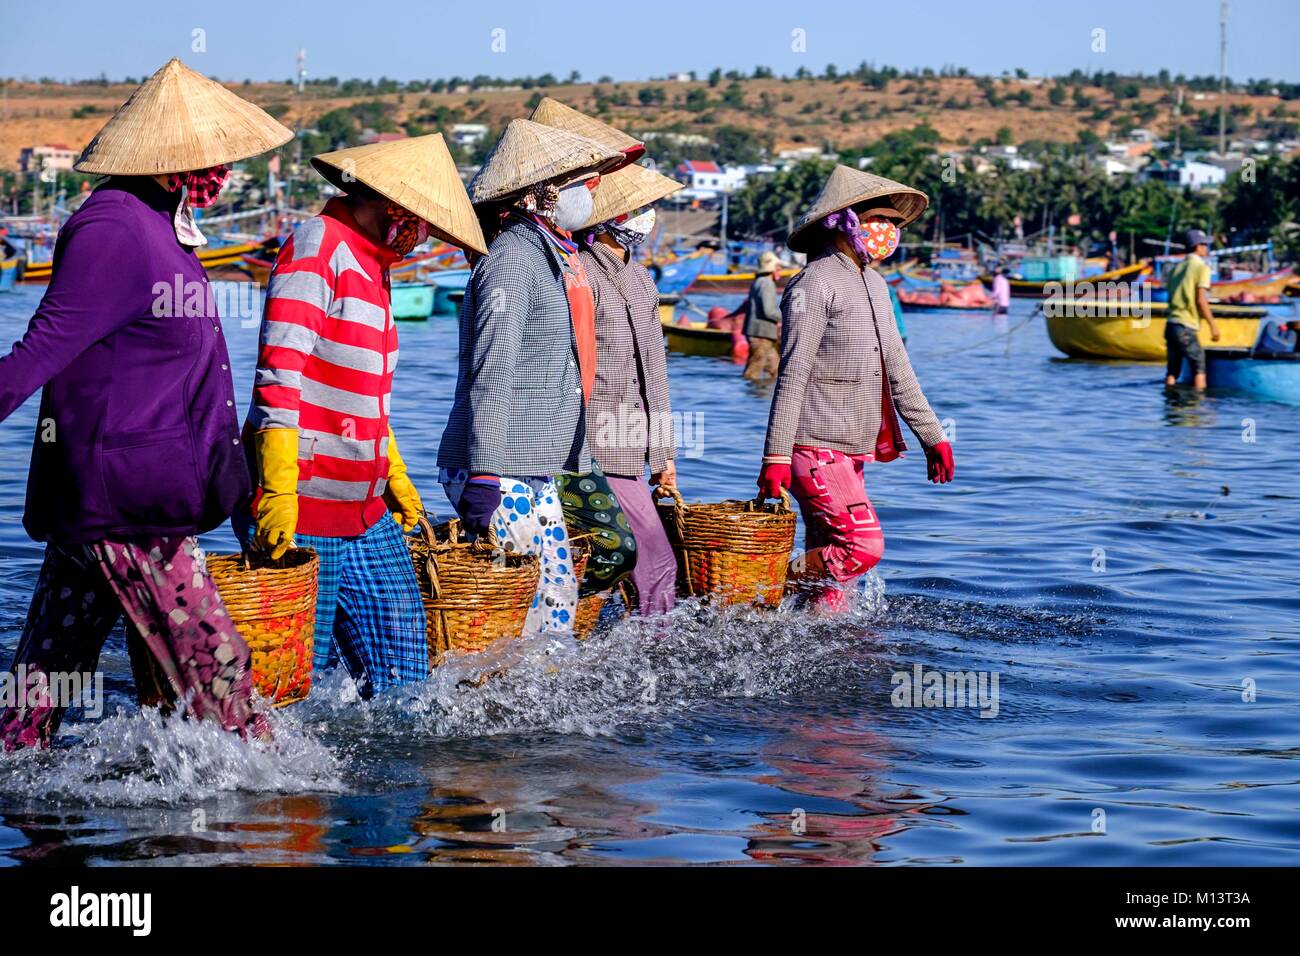 Vietnam, Binh Thuan province, Mui Ne, unloading anchovy basket on the beach Stock Photo